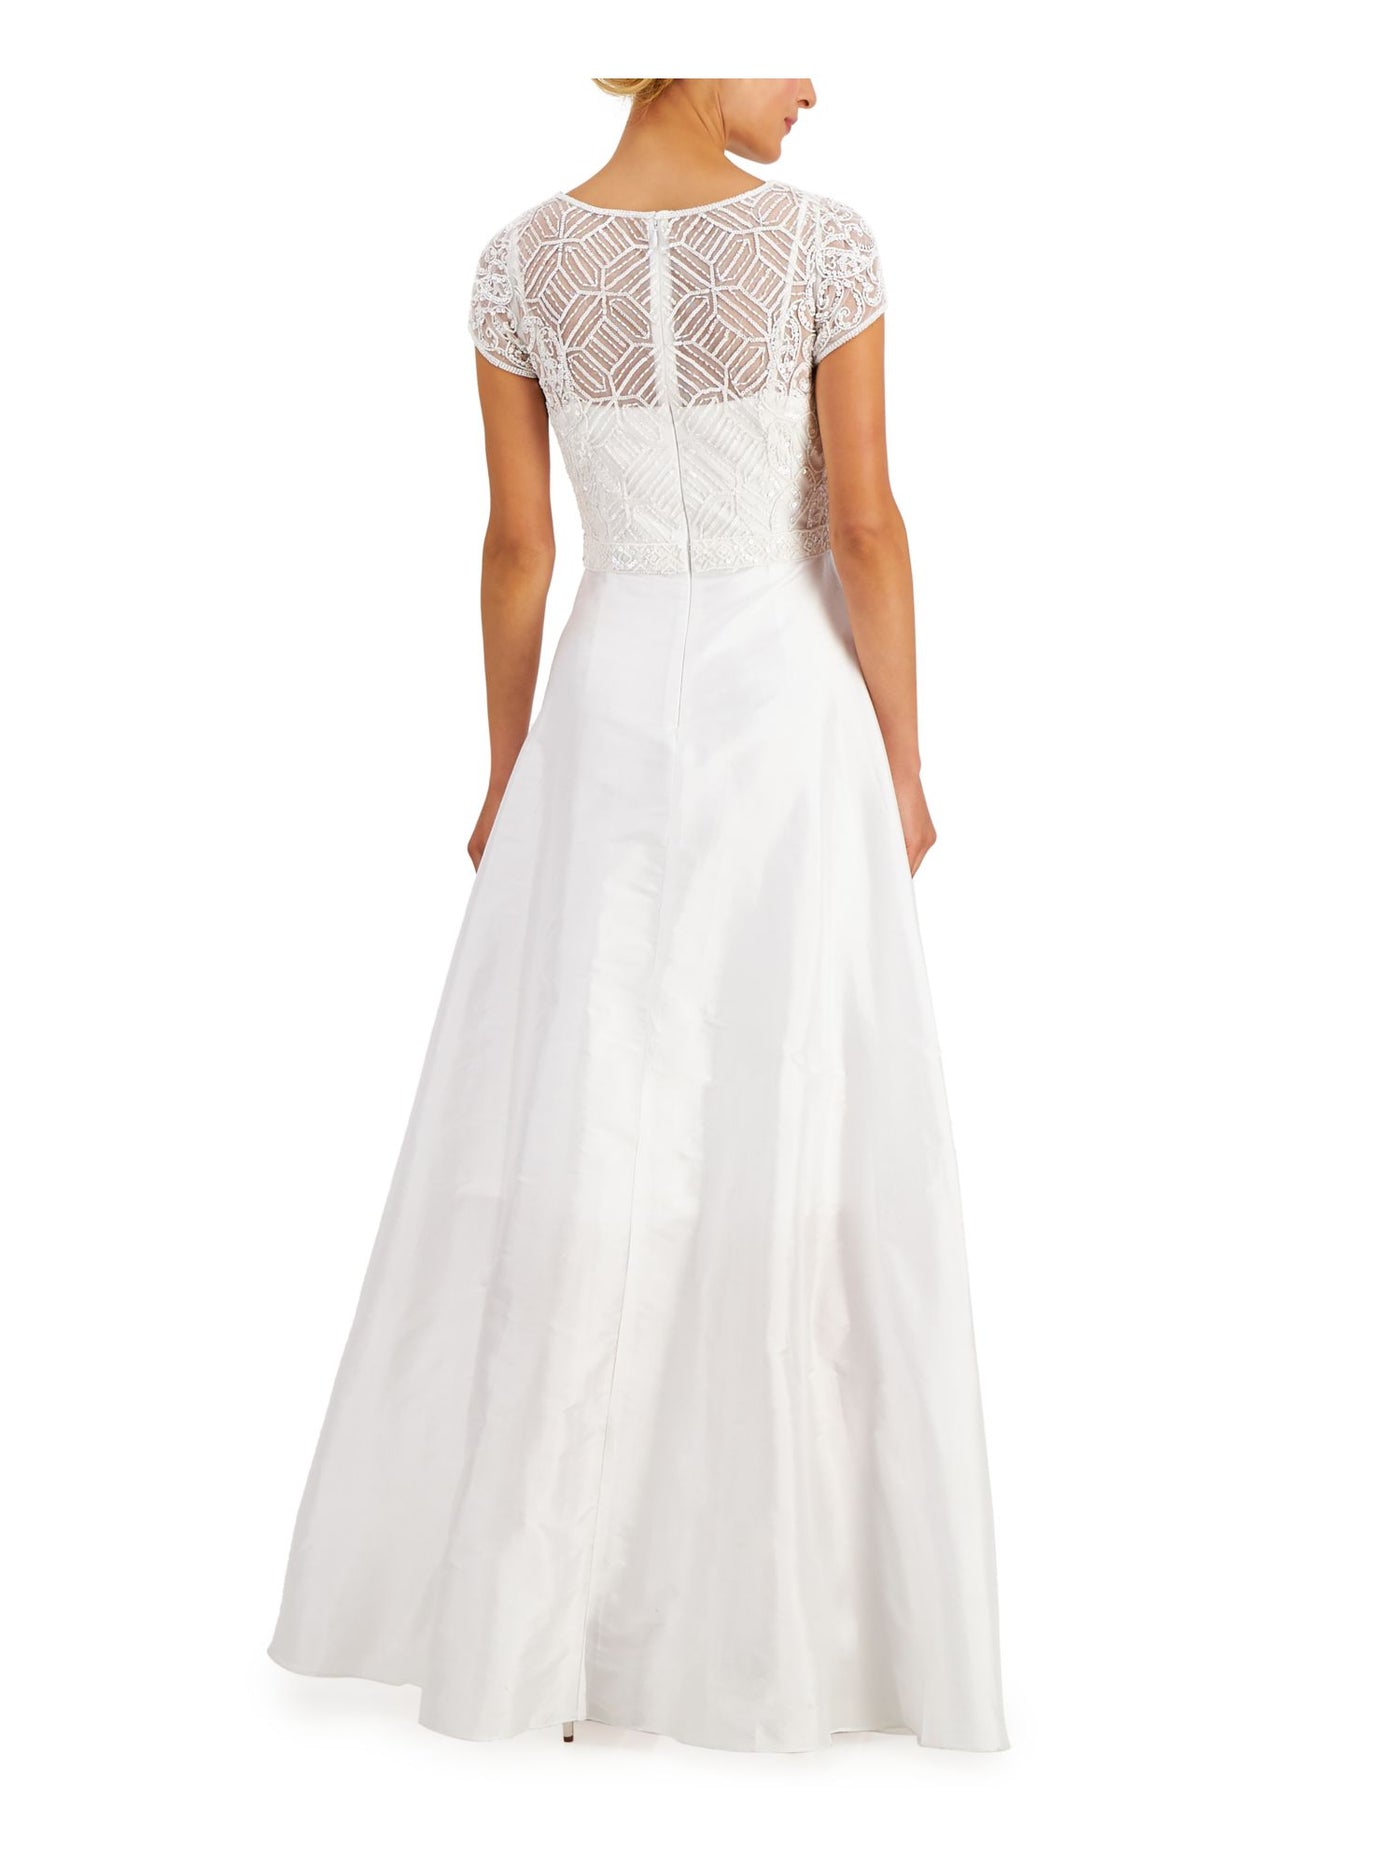 JKARA Womens White Zippered Beaded Overlay Lined Sleeveless V Neck Full-Length Evening Hi-Lo Dress S